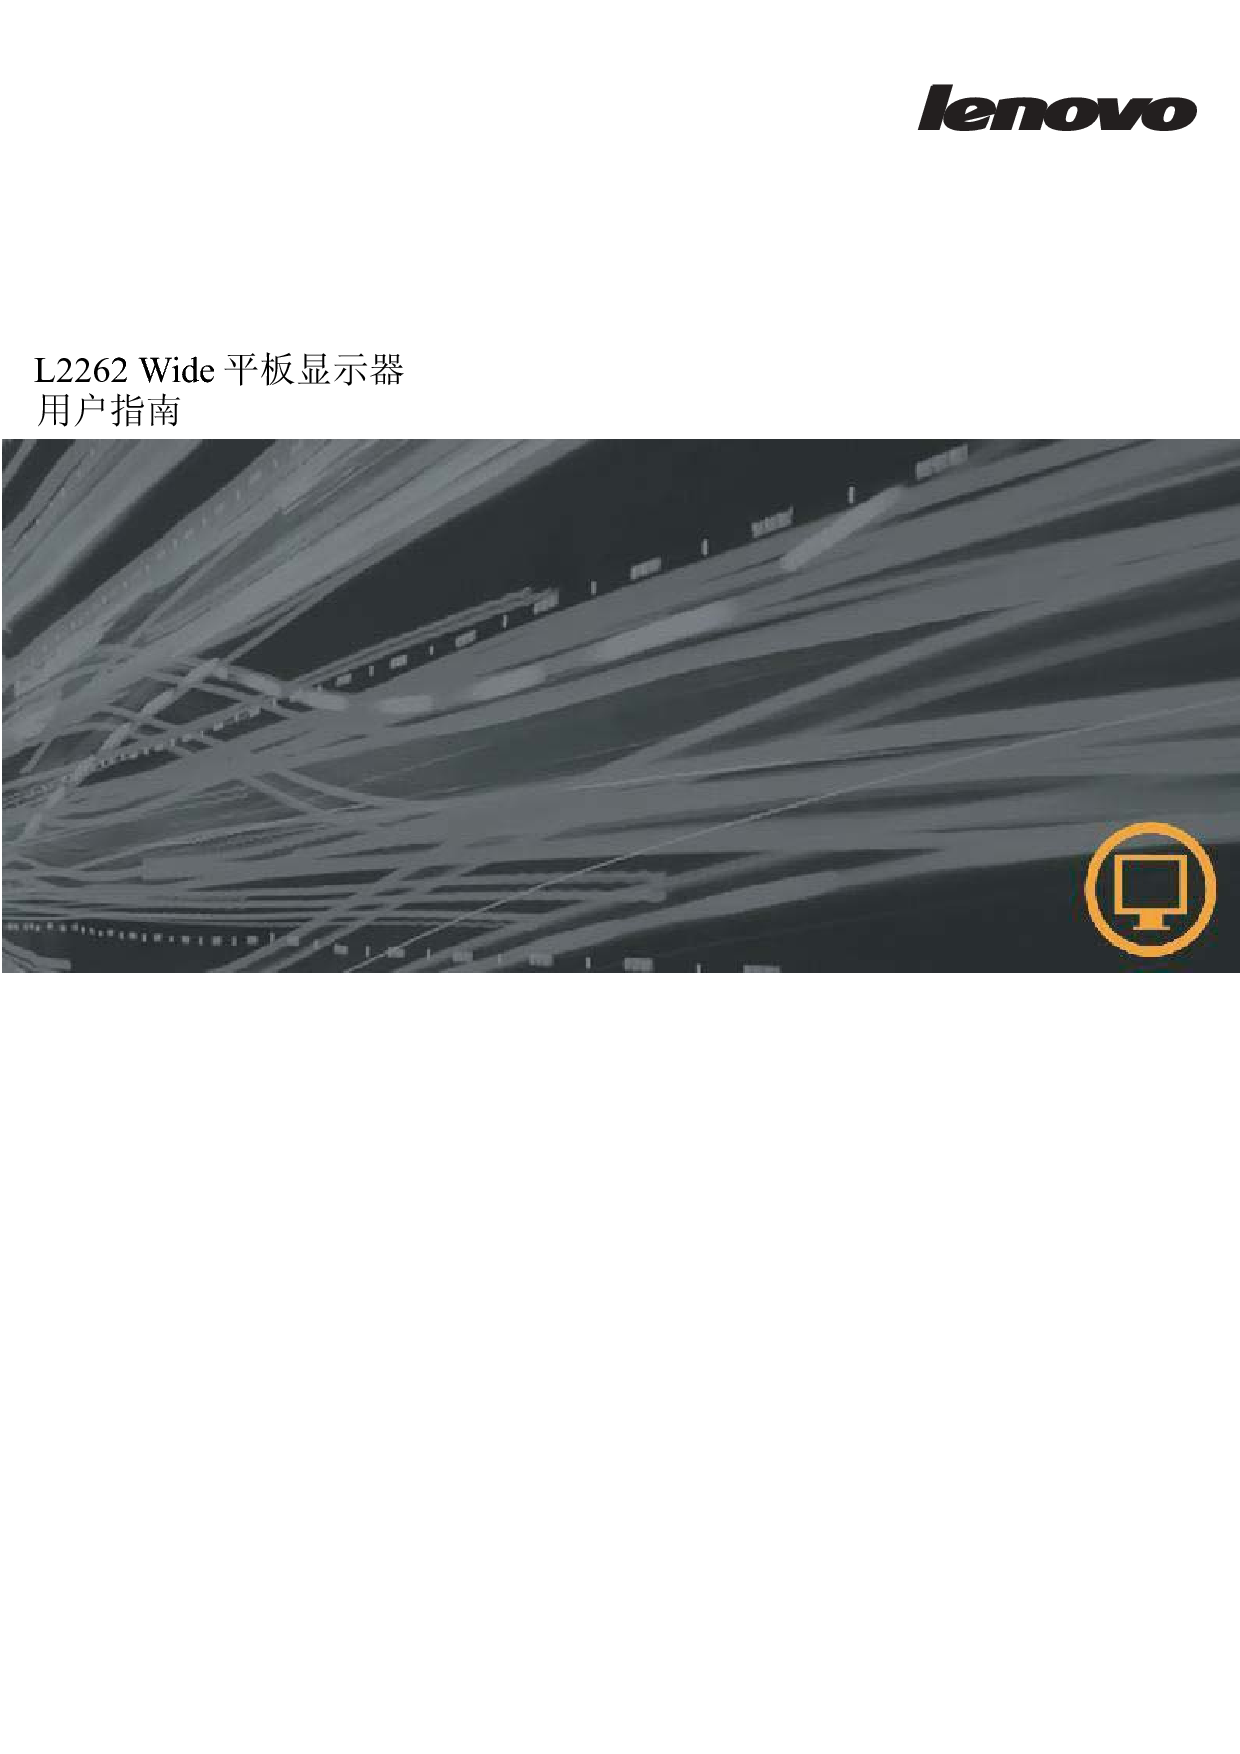 联想 Lenovo L2262 Wide 用户手册 封面